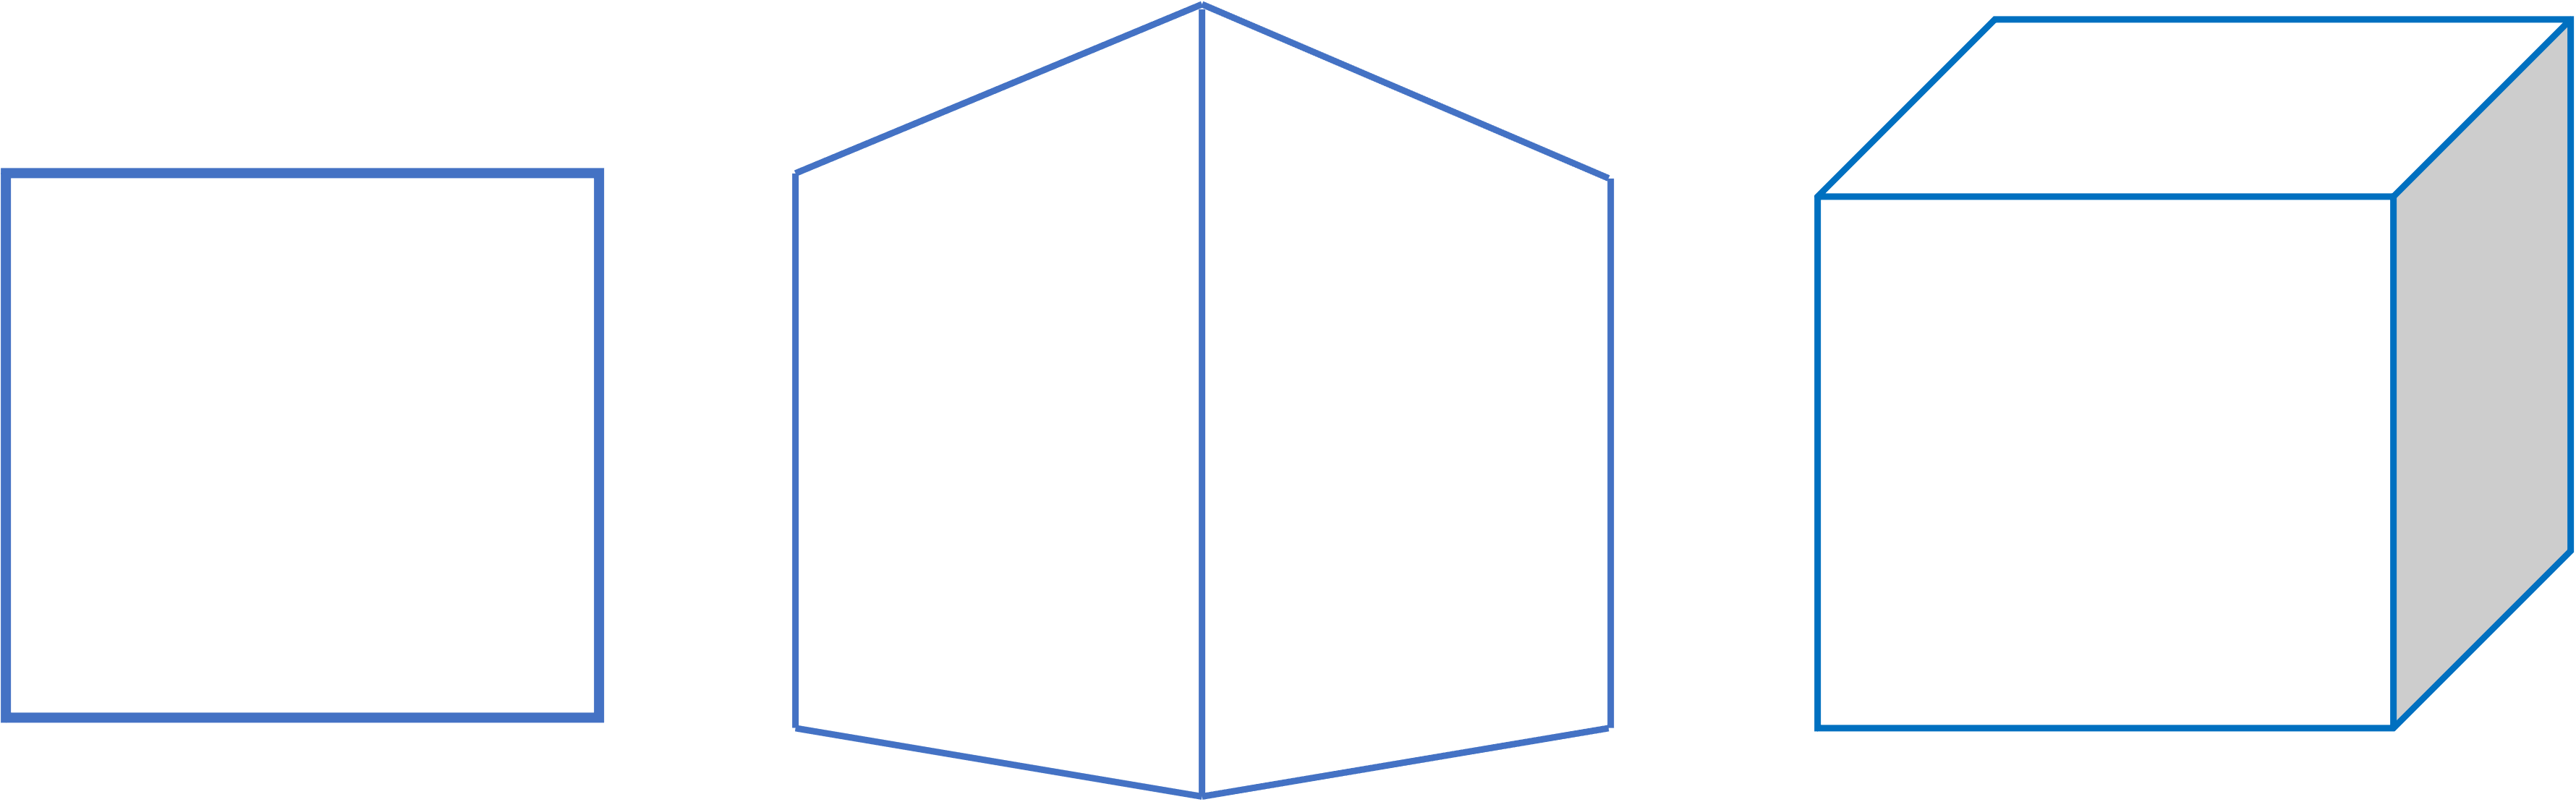 animation_desk_windows_perspective_ruler_sample_cube.png